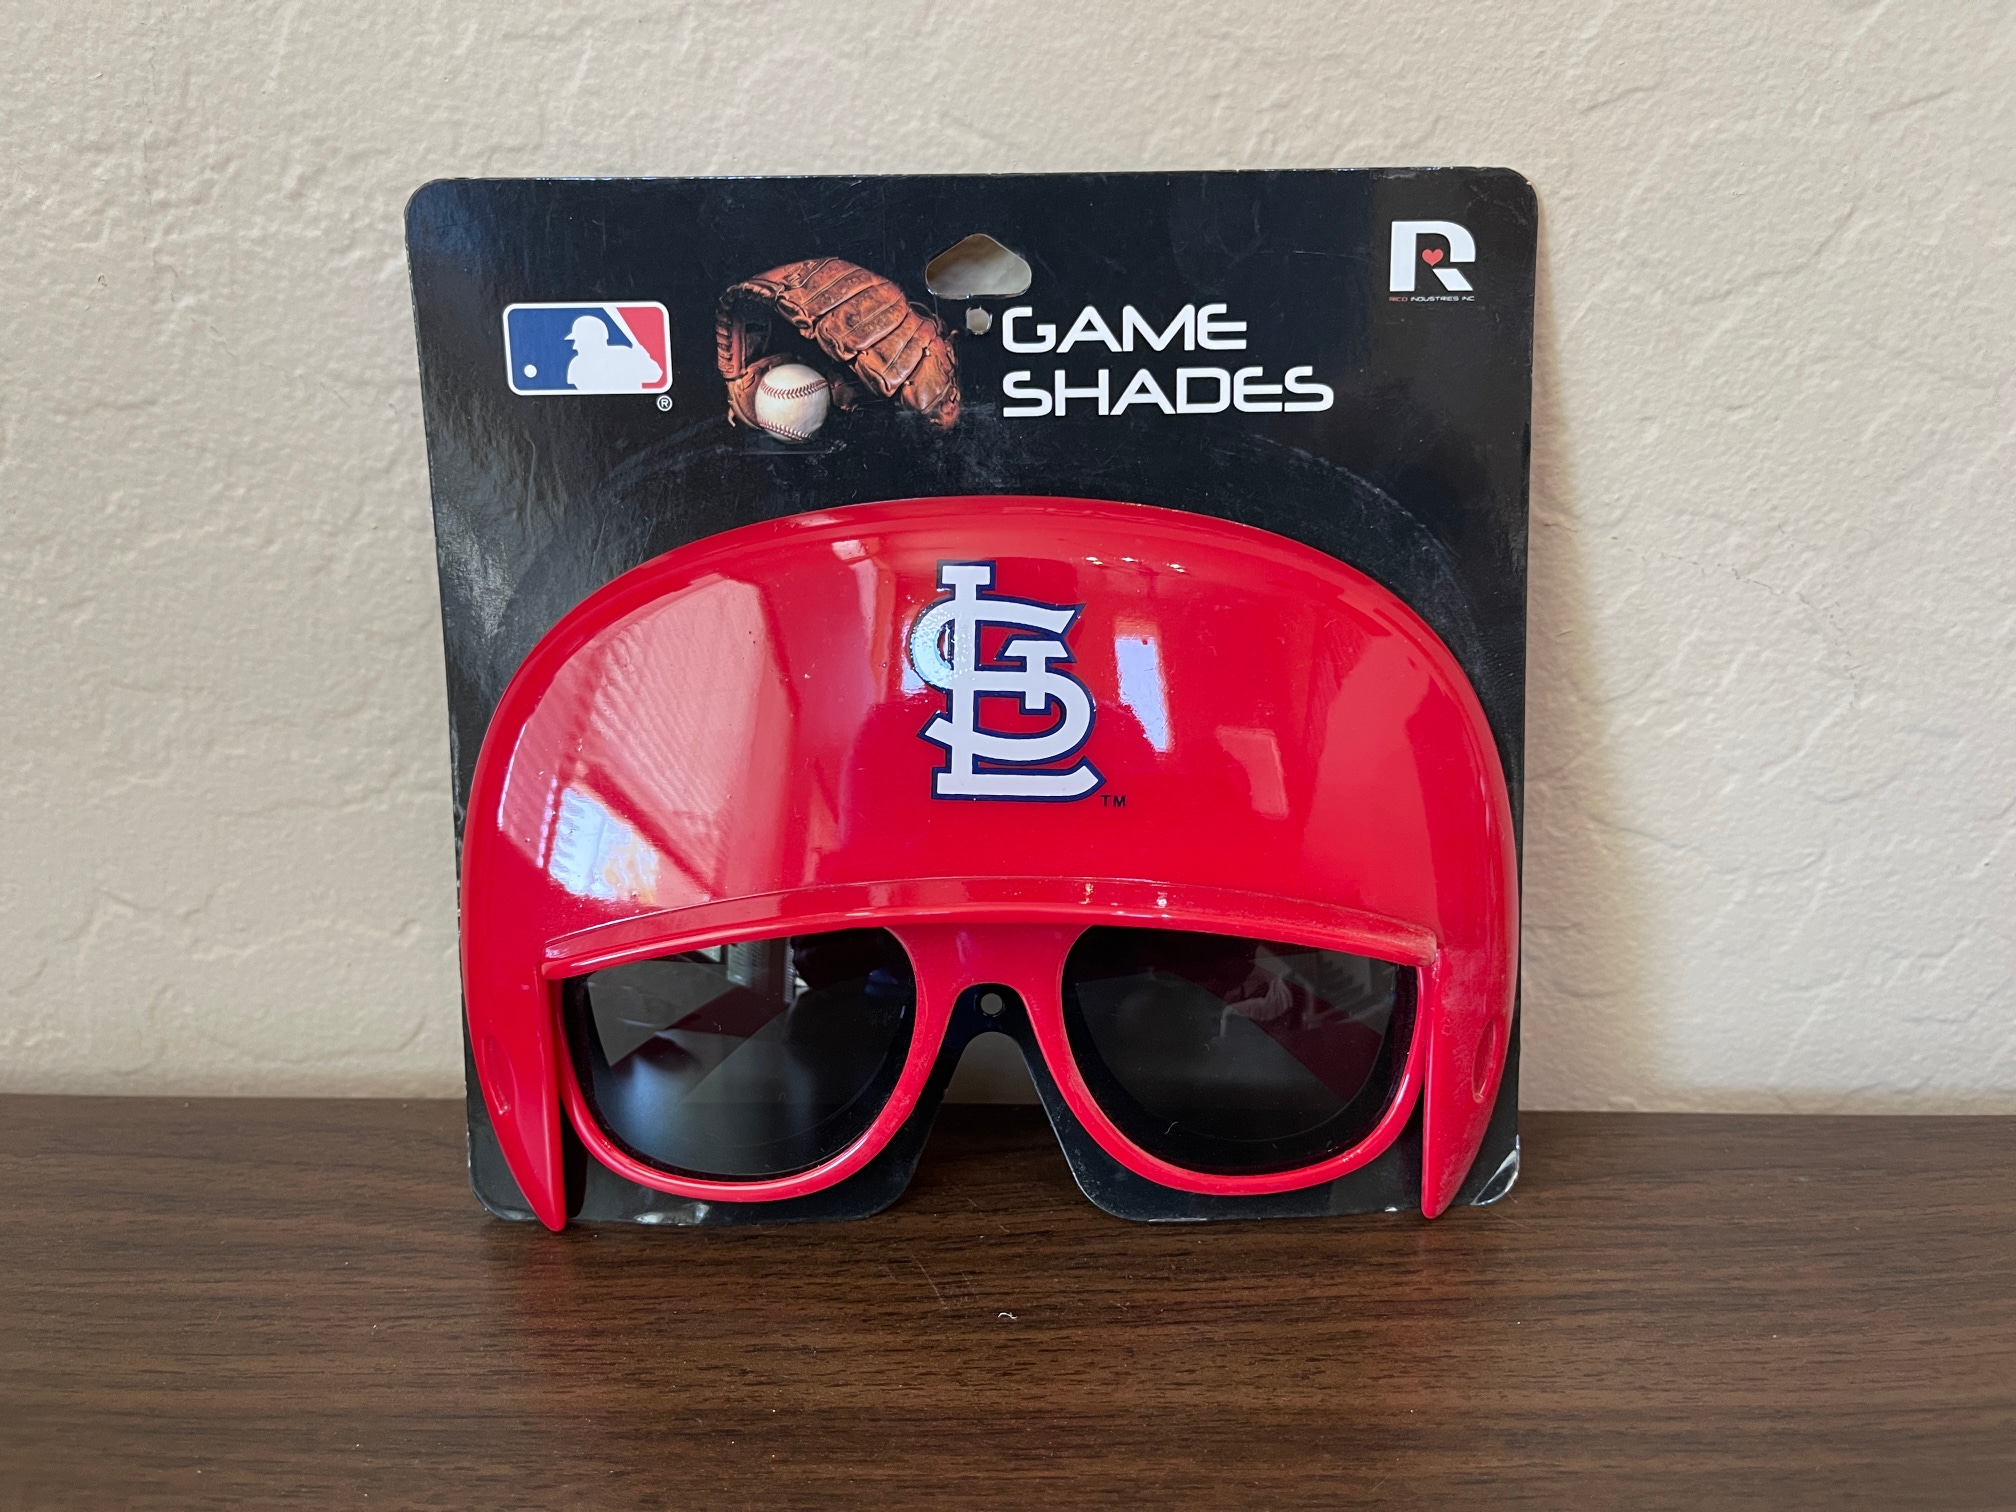 St. Louis Cardinals MLB BASEBALL GAME SHADES Batting Helmet Style Sunglasses!